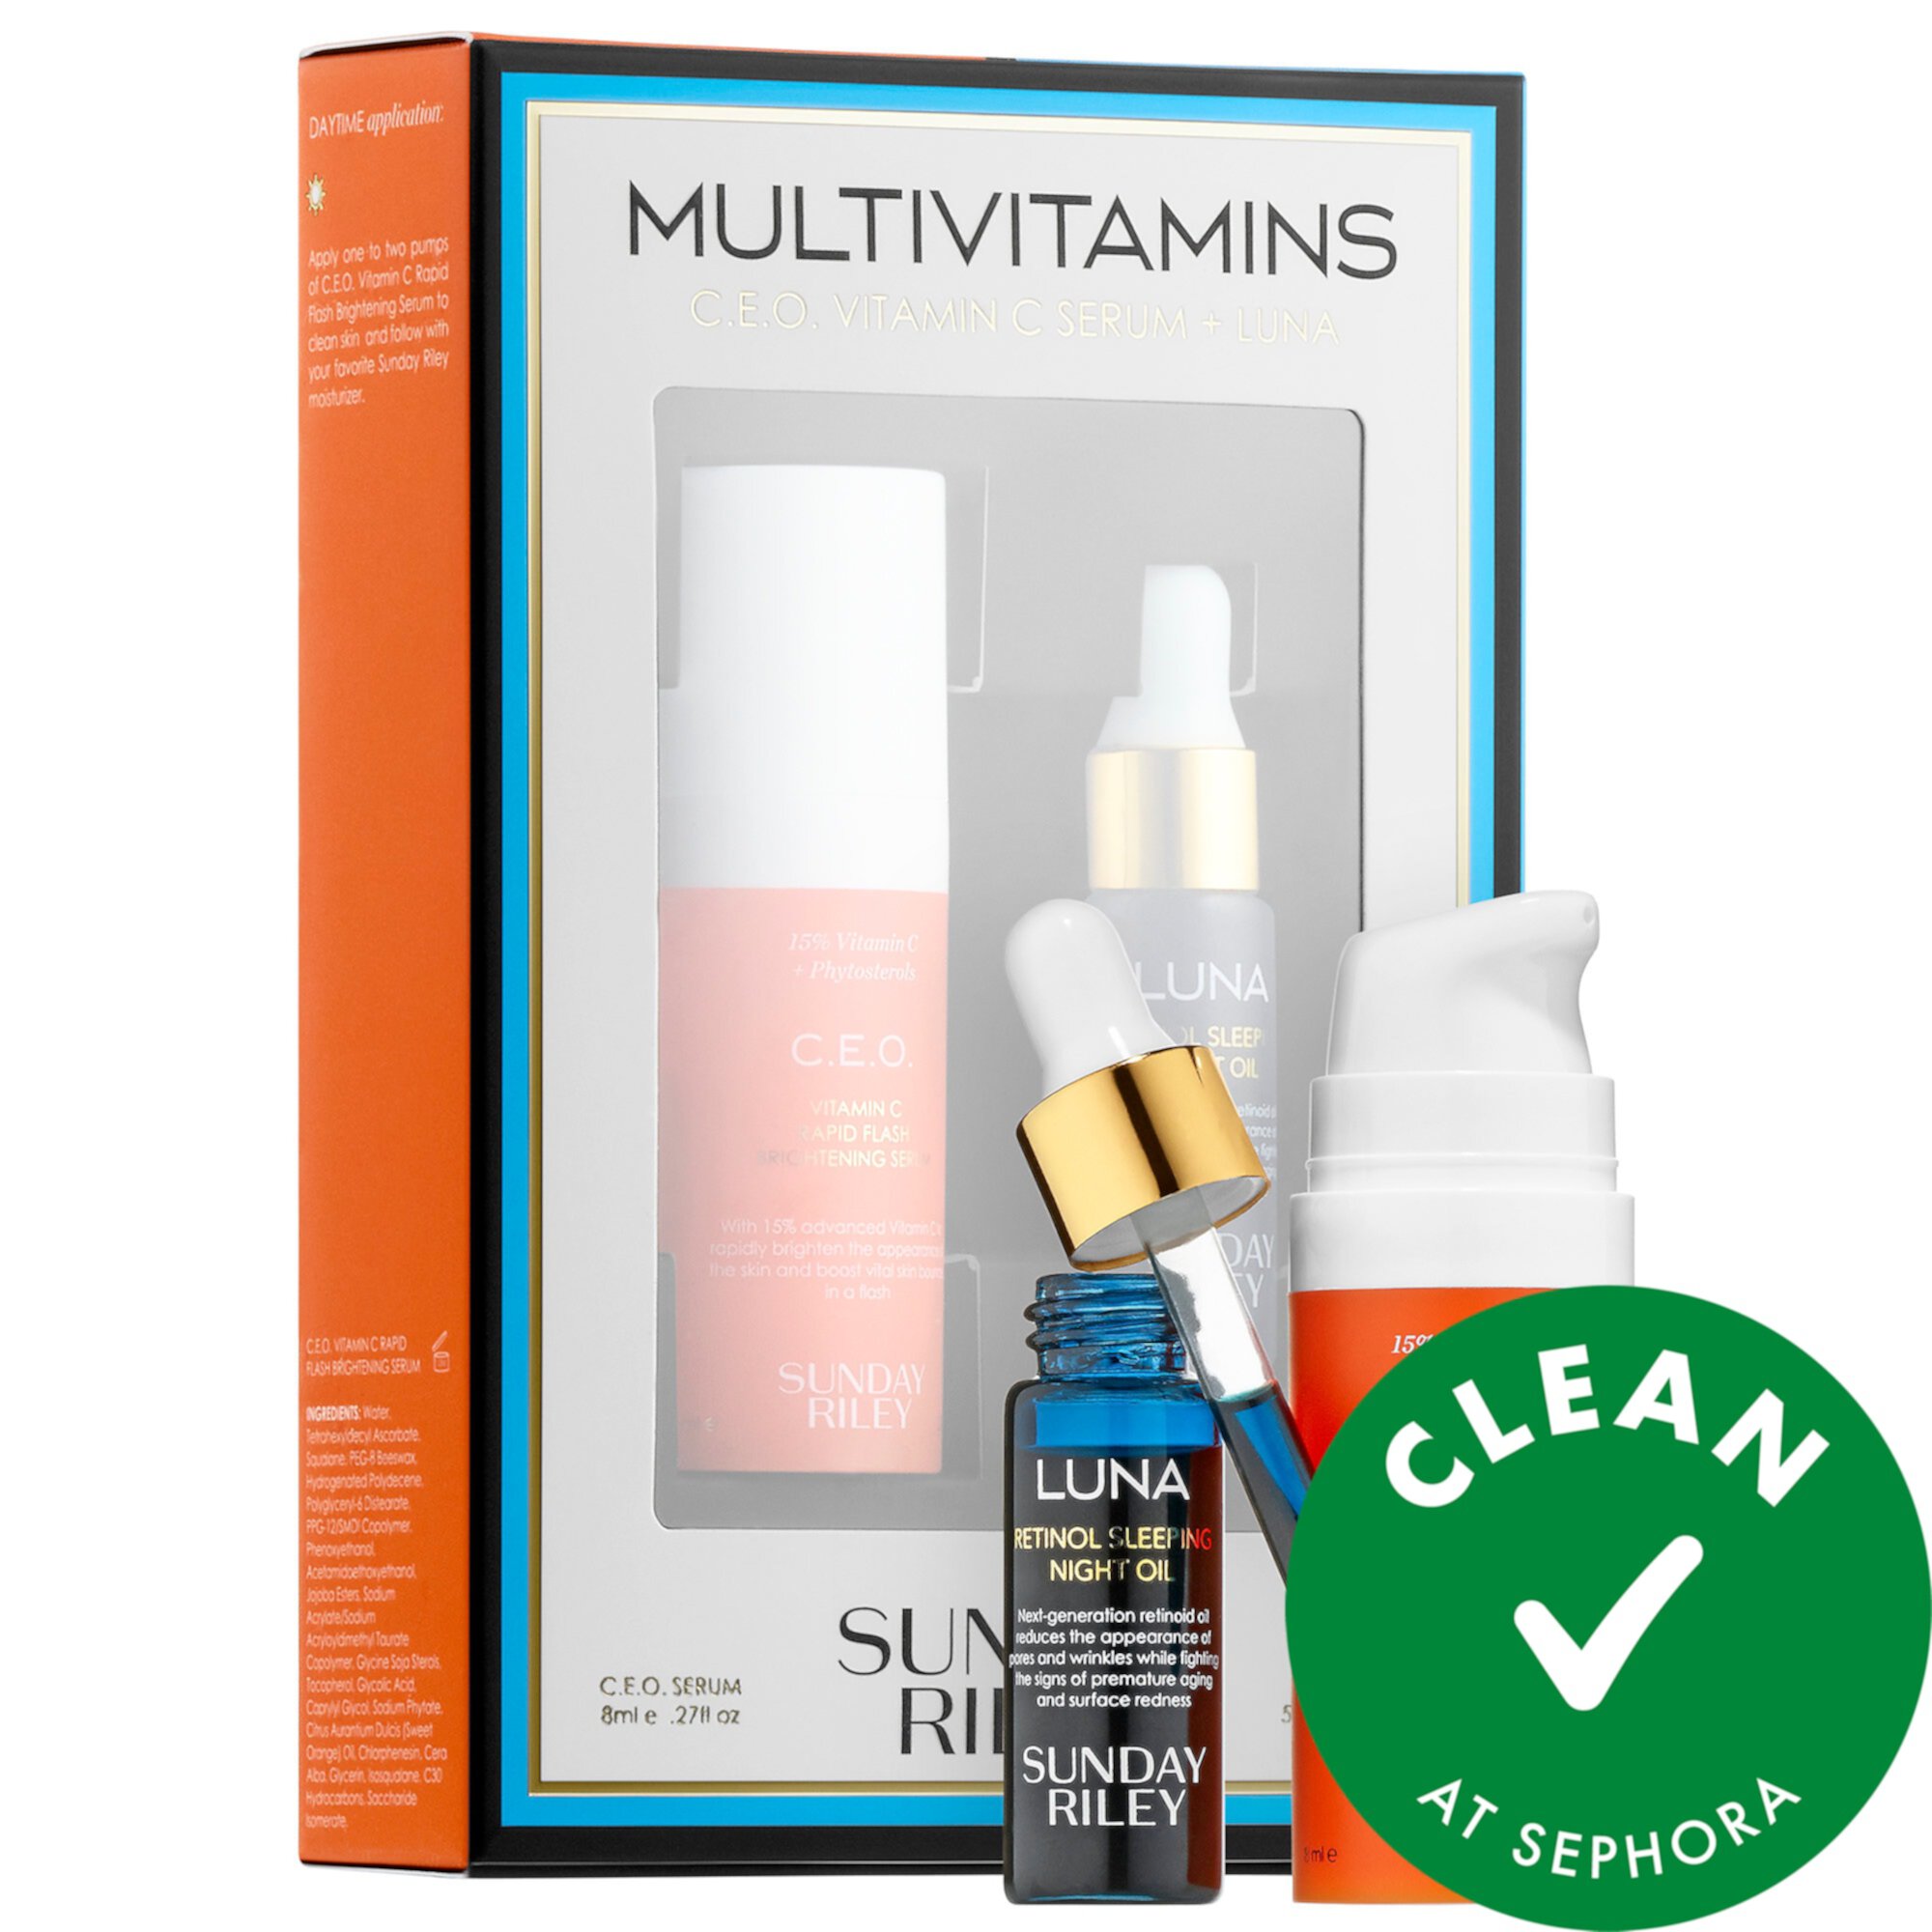 Multivitamins 15% Vitamin C + Retinol Mini Set Sunday Riley